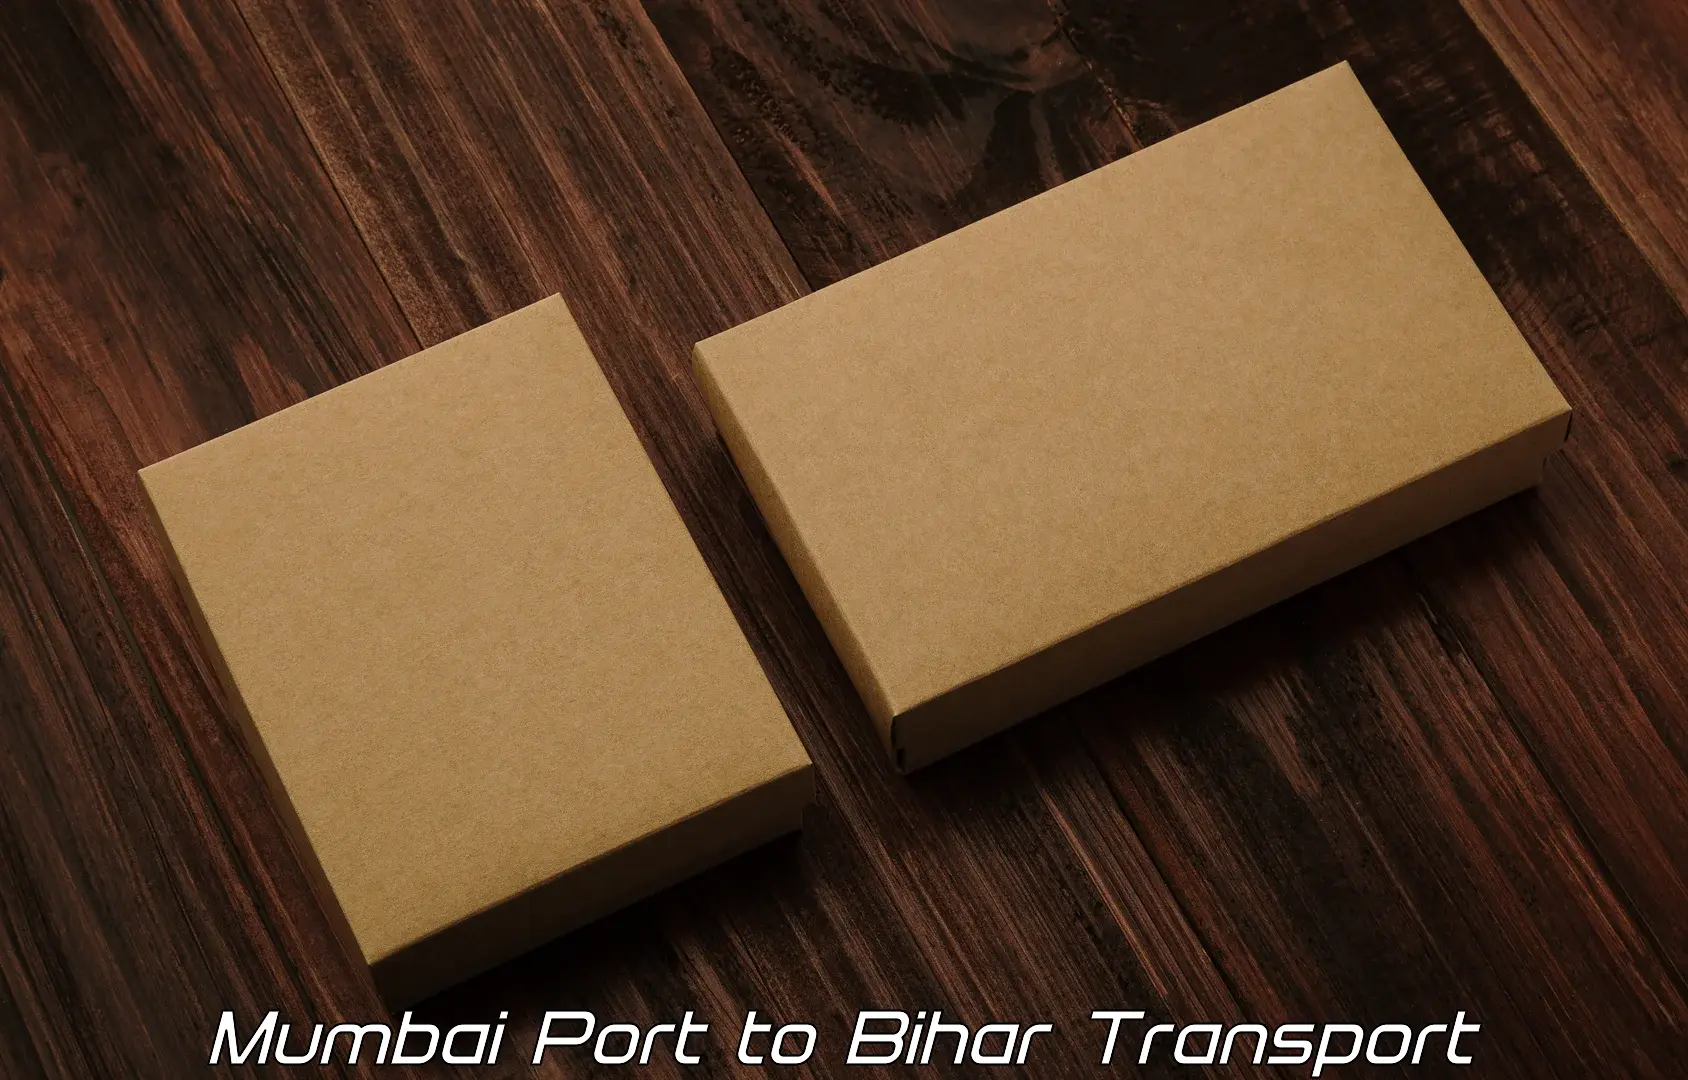 Daily parcel service transport in Mumbai Port to Mahaddipur